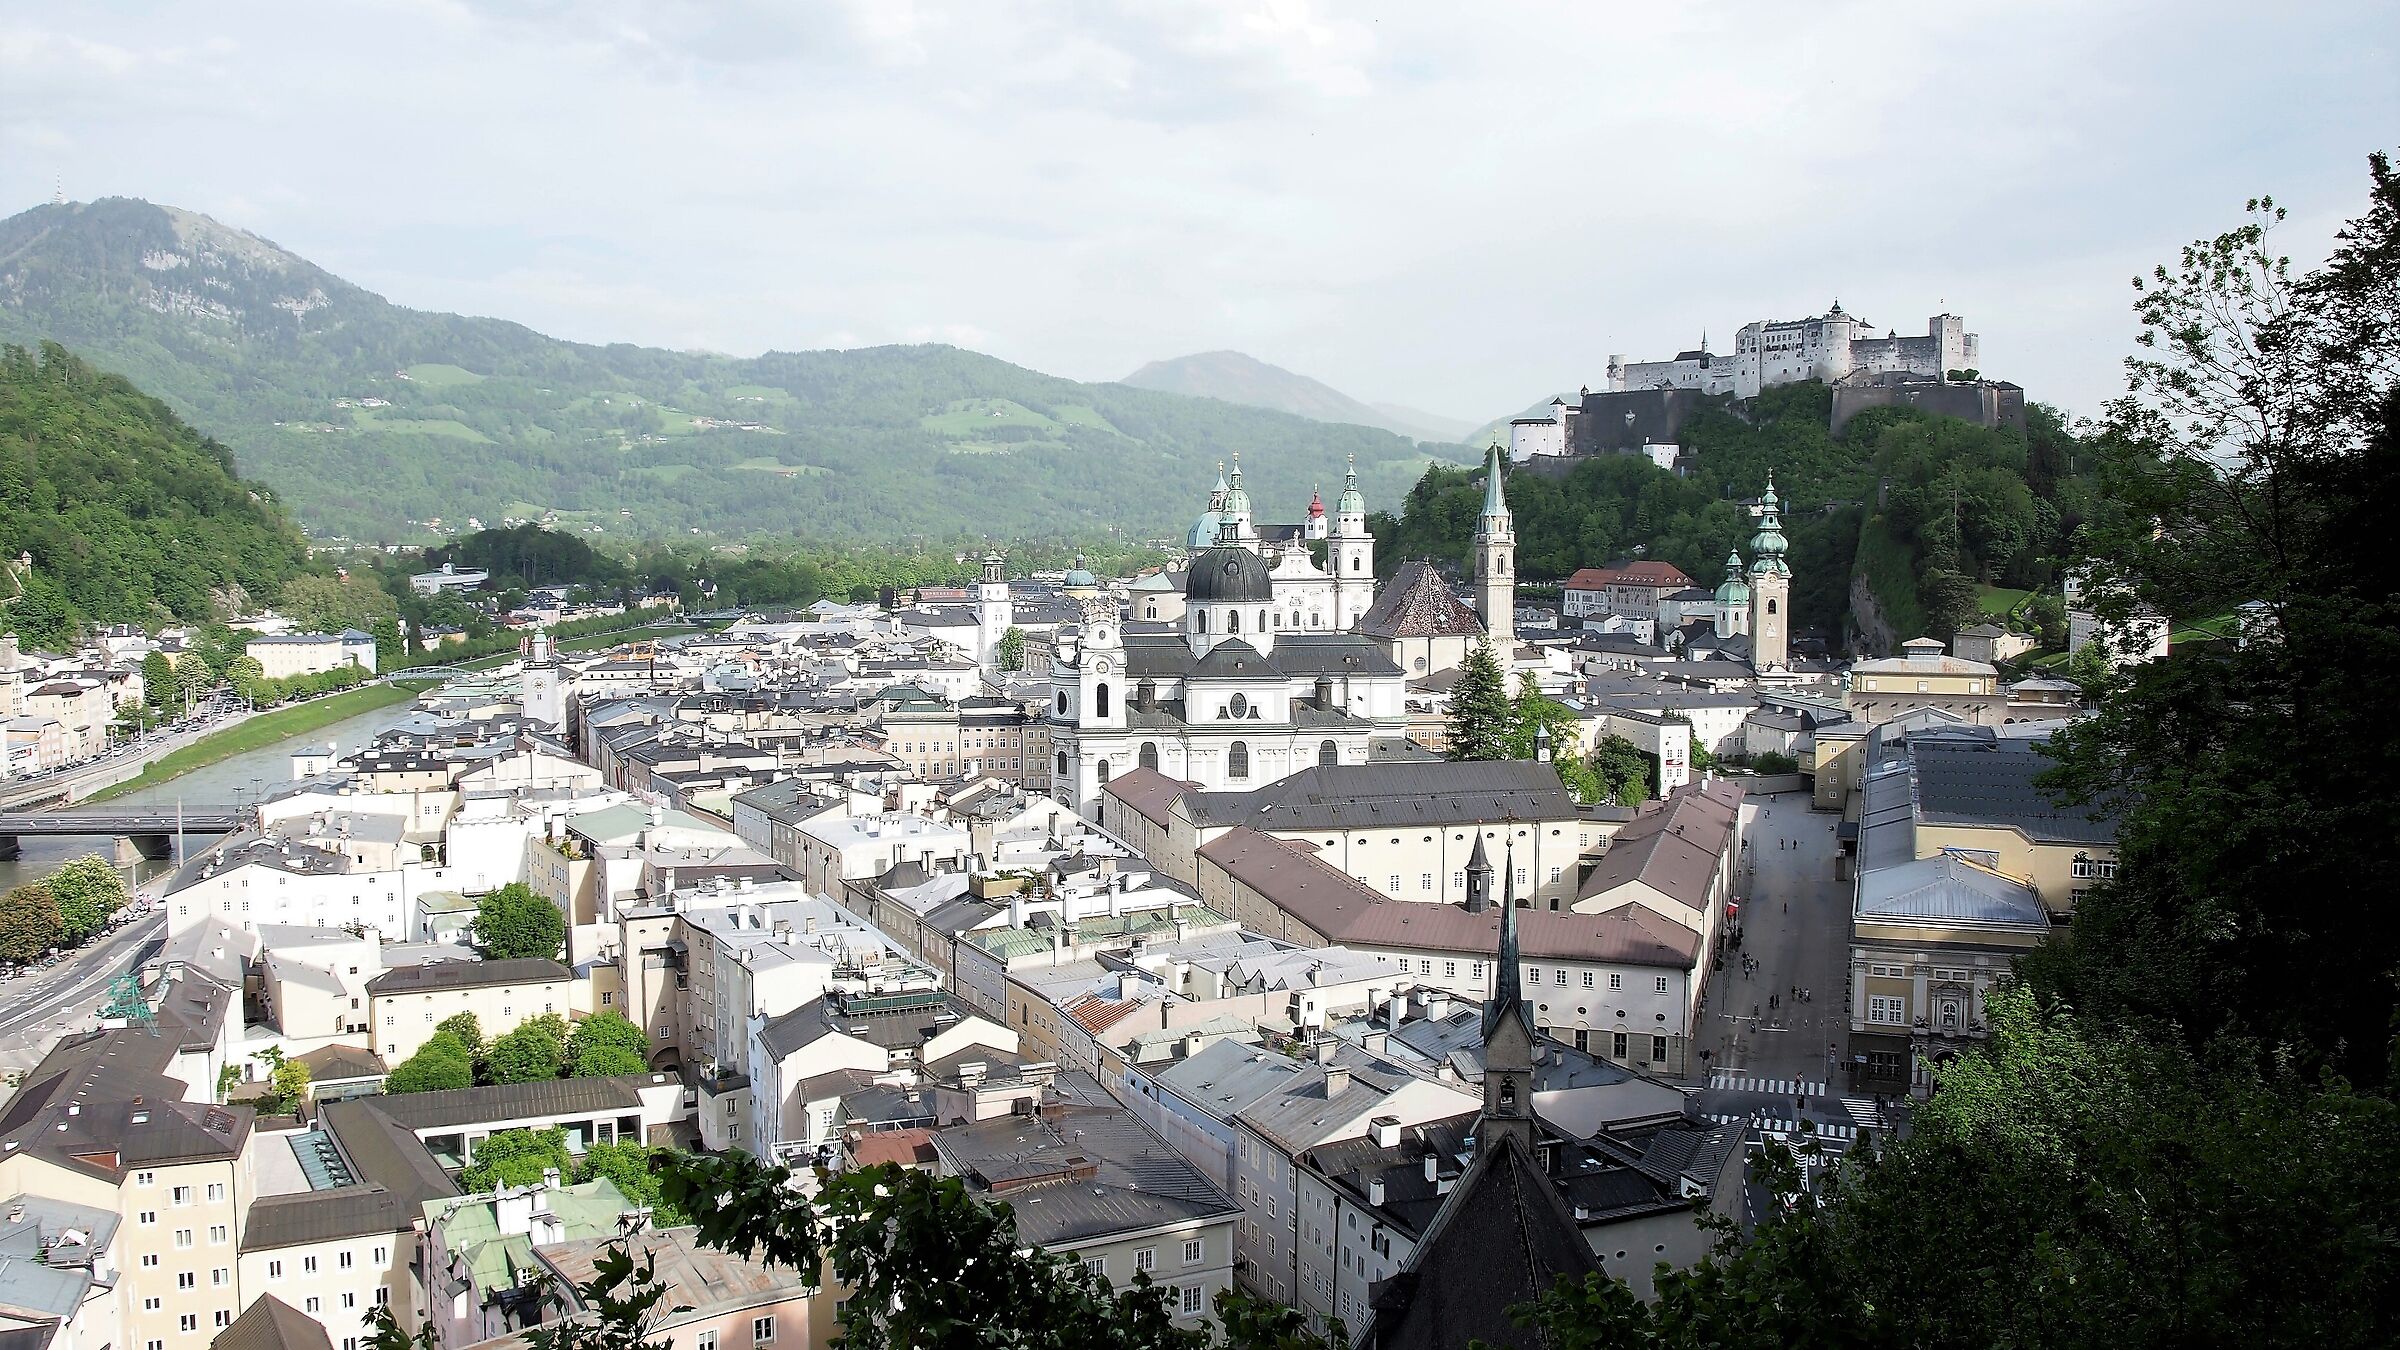 Austria - Salzburg no. 1...